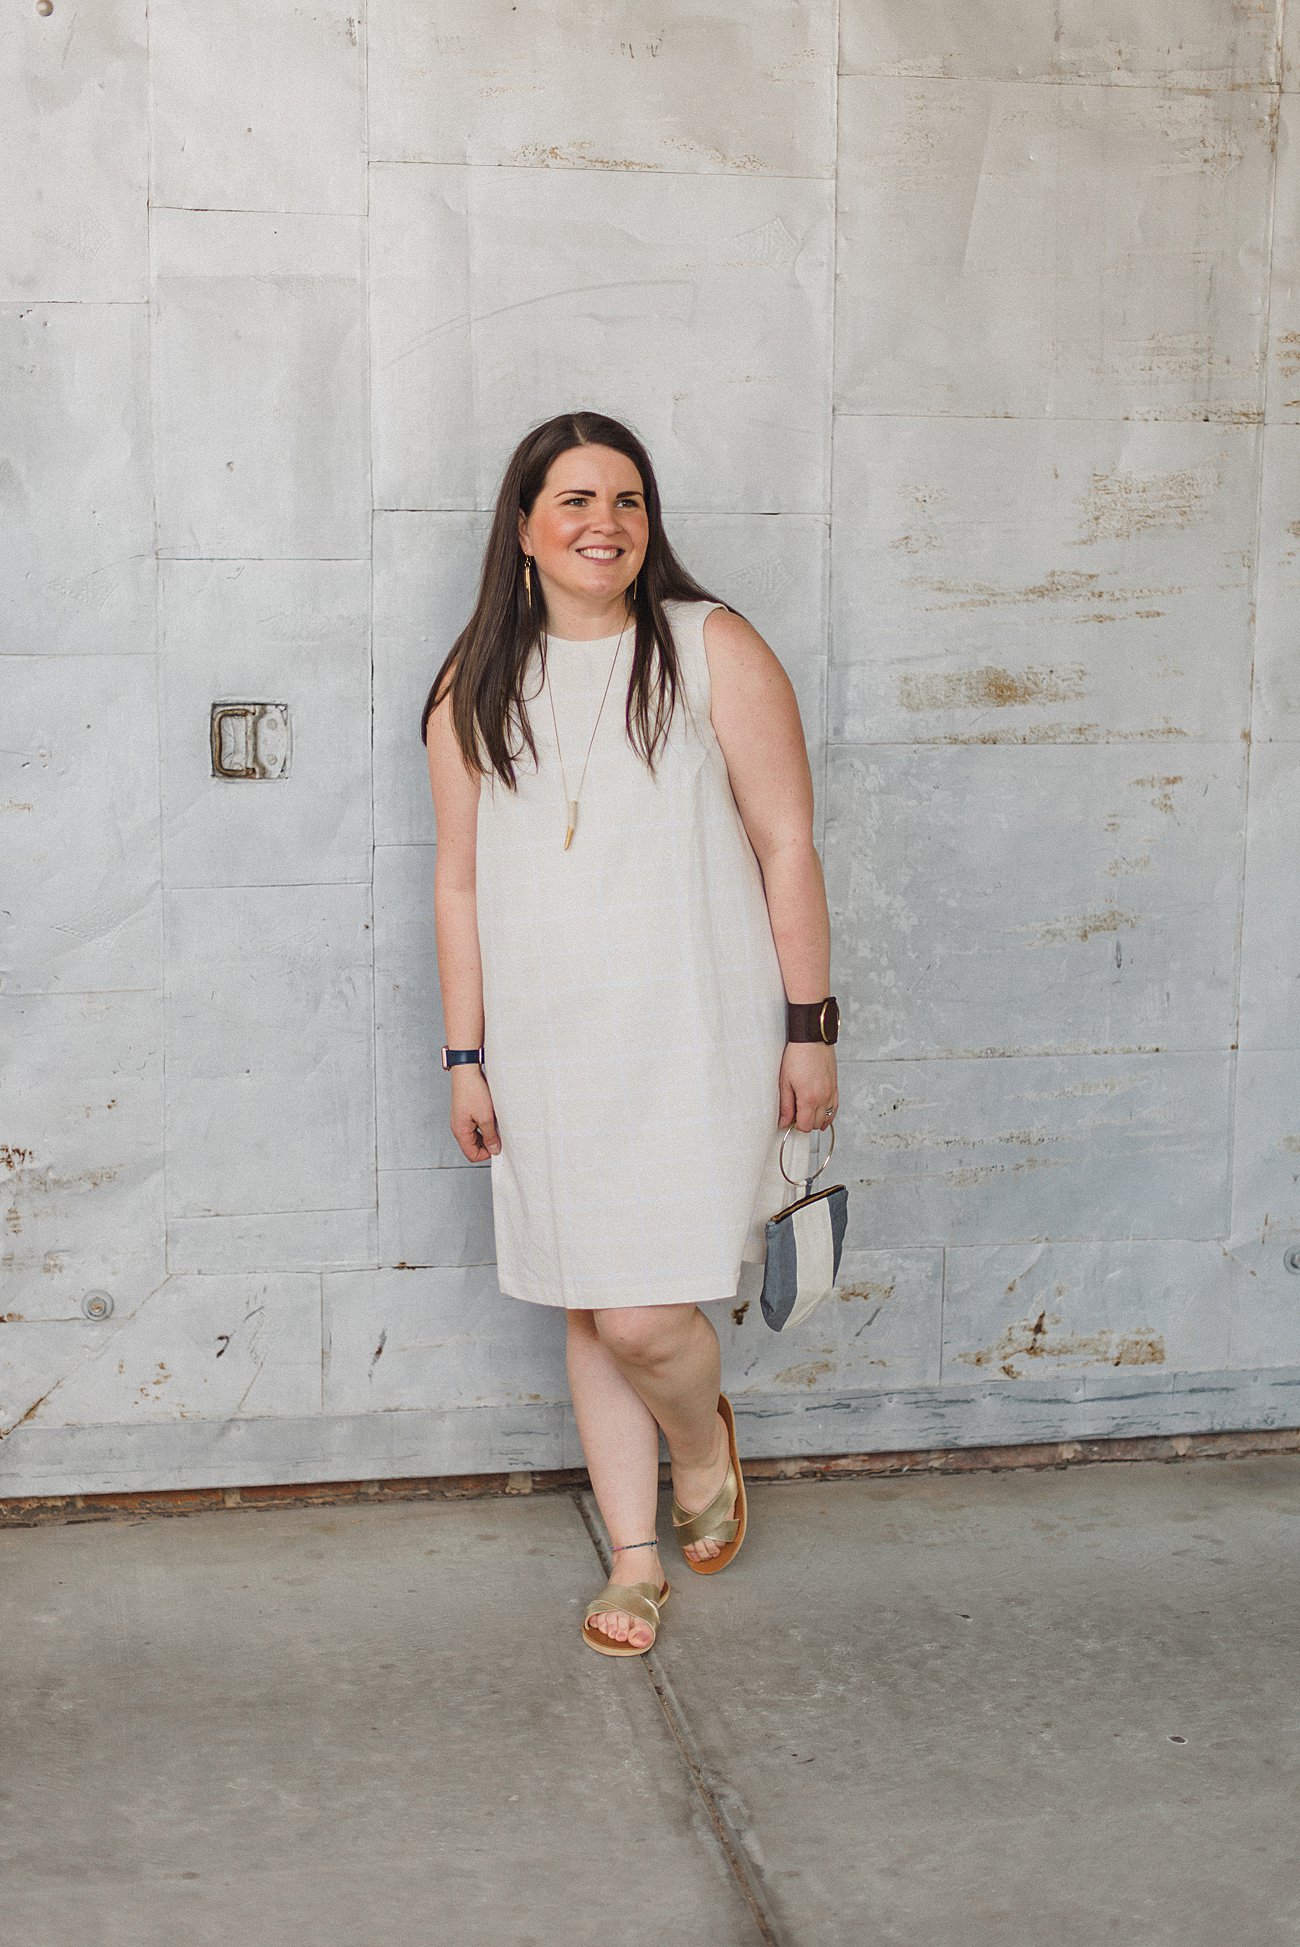 Spring Ethical Fashion Outfit Idea: Dressy Neutrals | North Carolina Ethical Fashion Blogger (4)